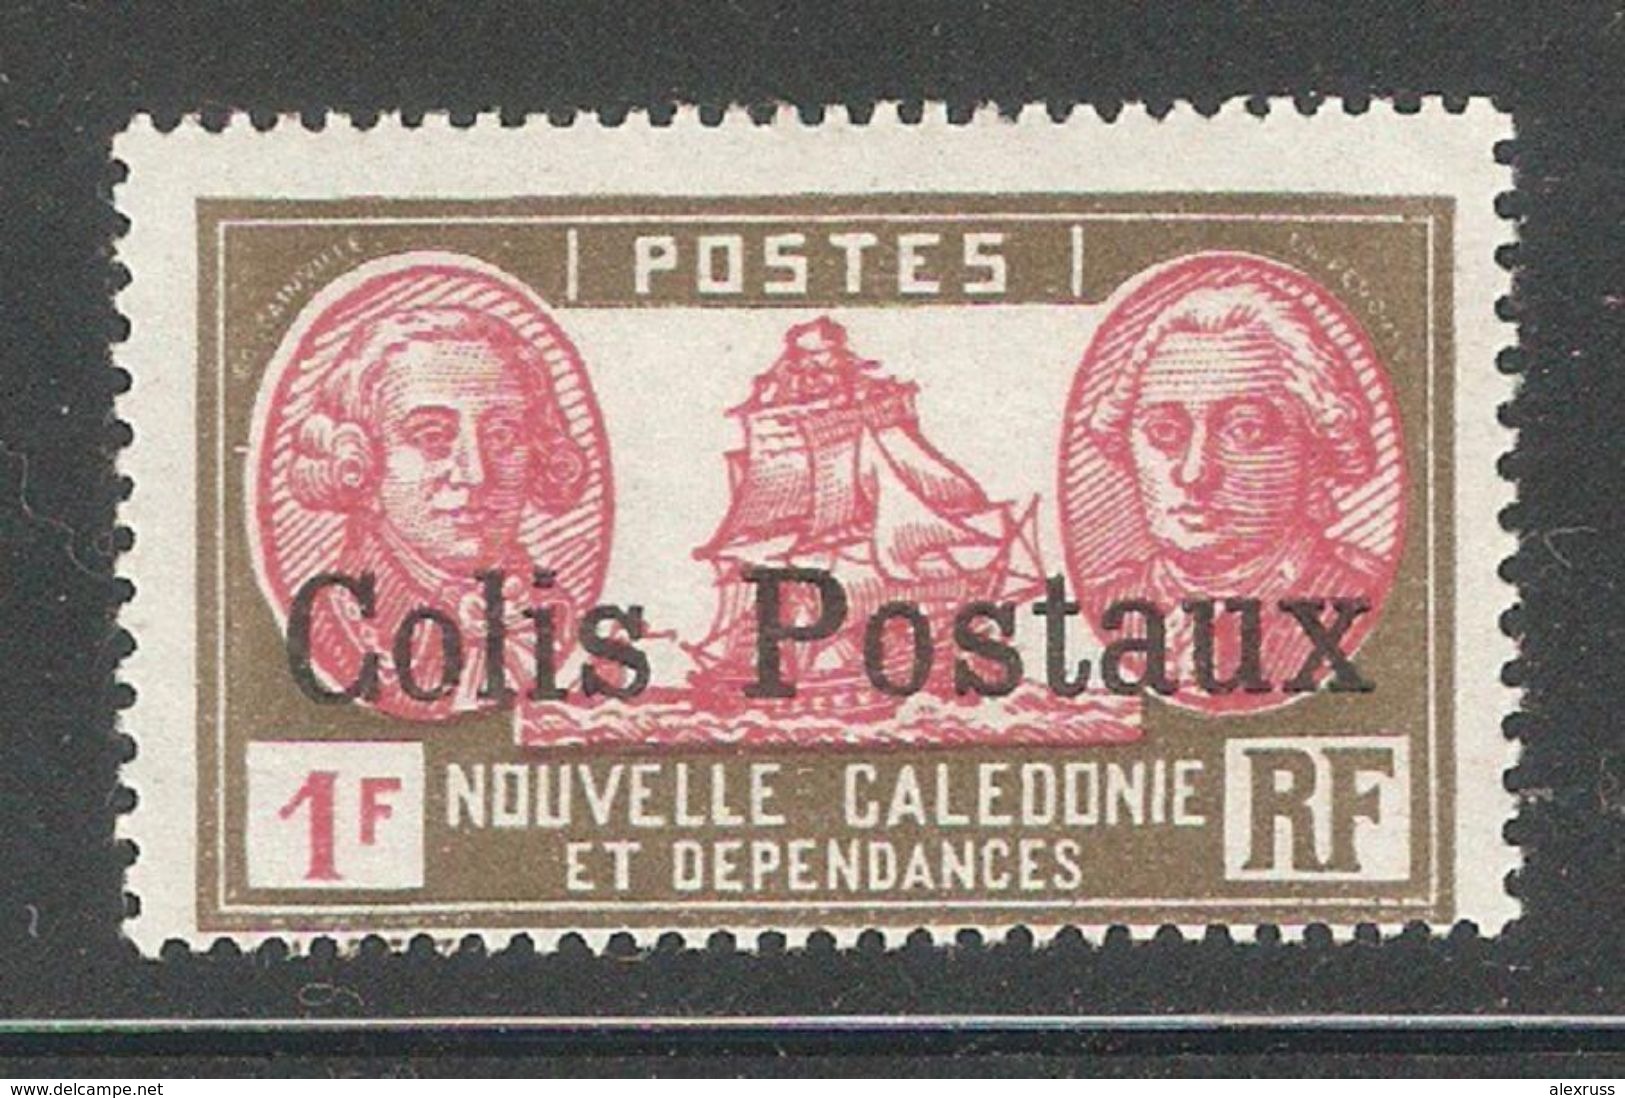 New Caledonia 1930, 1fr Colis Parcel Post ,Scott # Q5,VF Mint Hinged* (K-8) - Unused Stamps